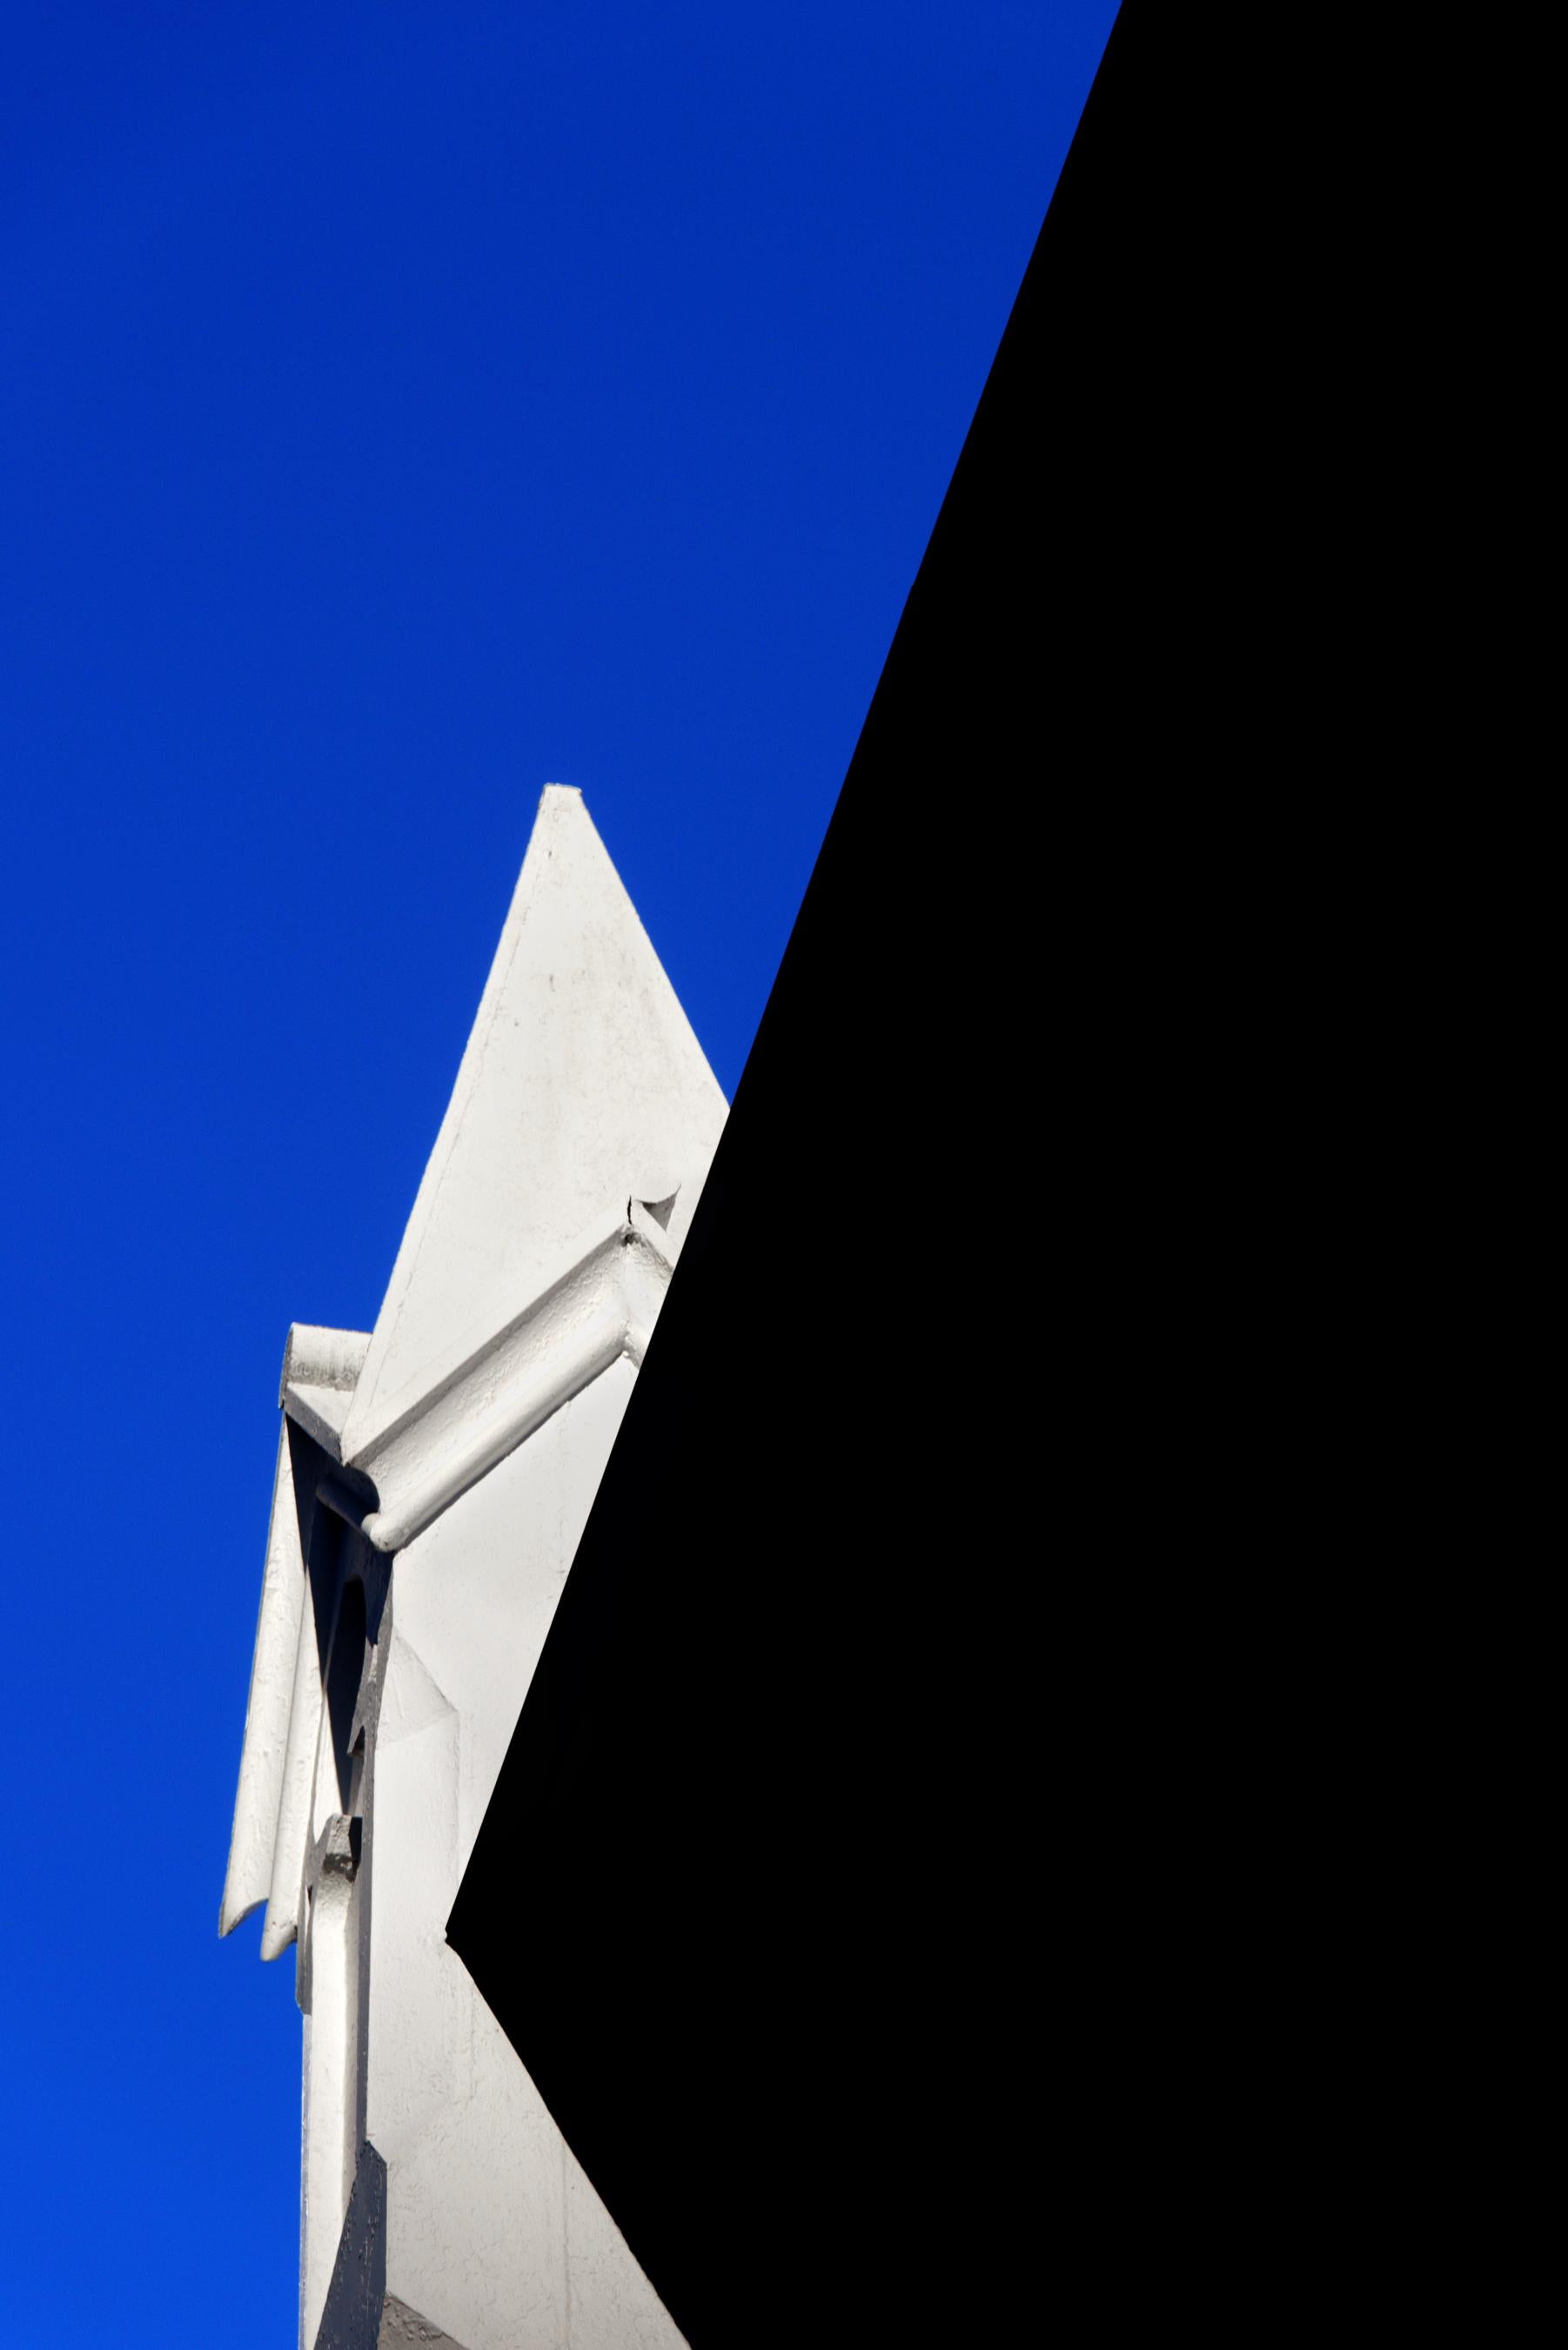 Bob Krasner Color Photograph - "East Village Abstract #1", photograph, city, architecture, light, black, blue